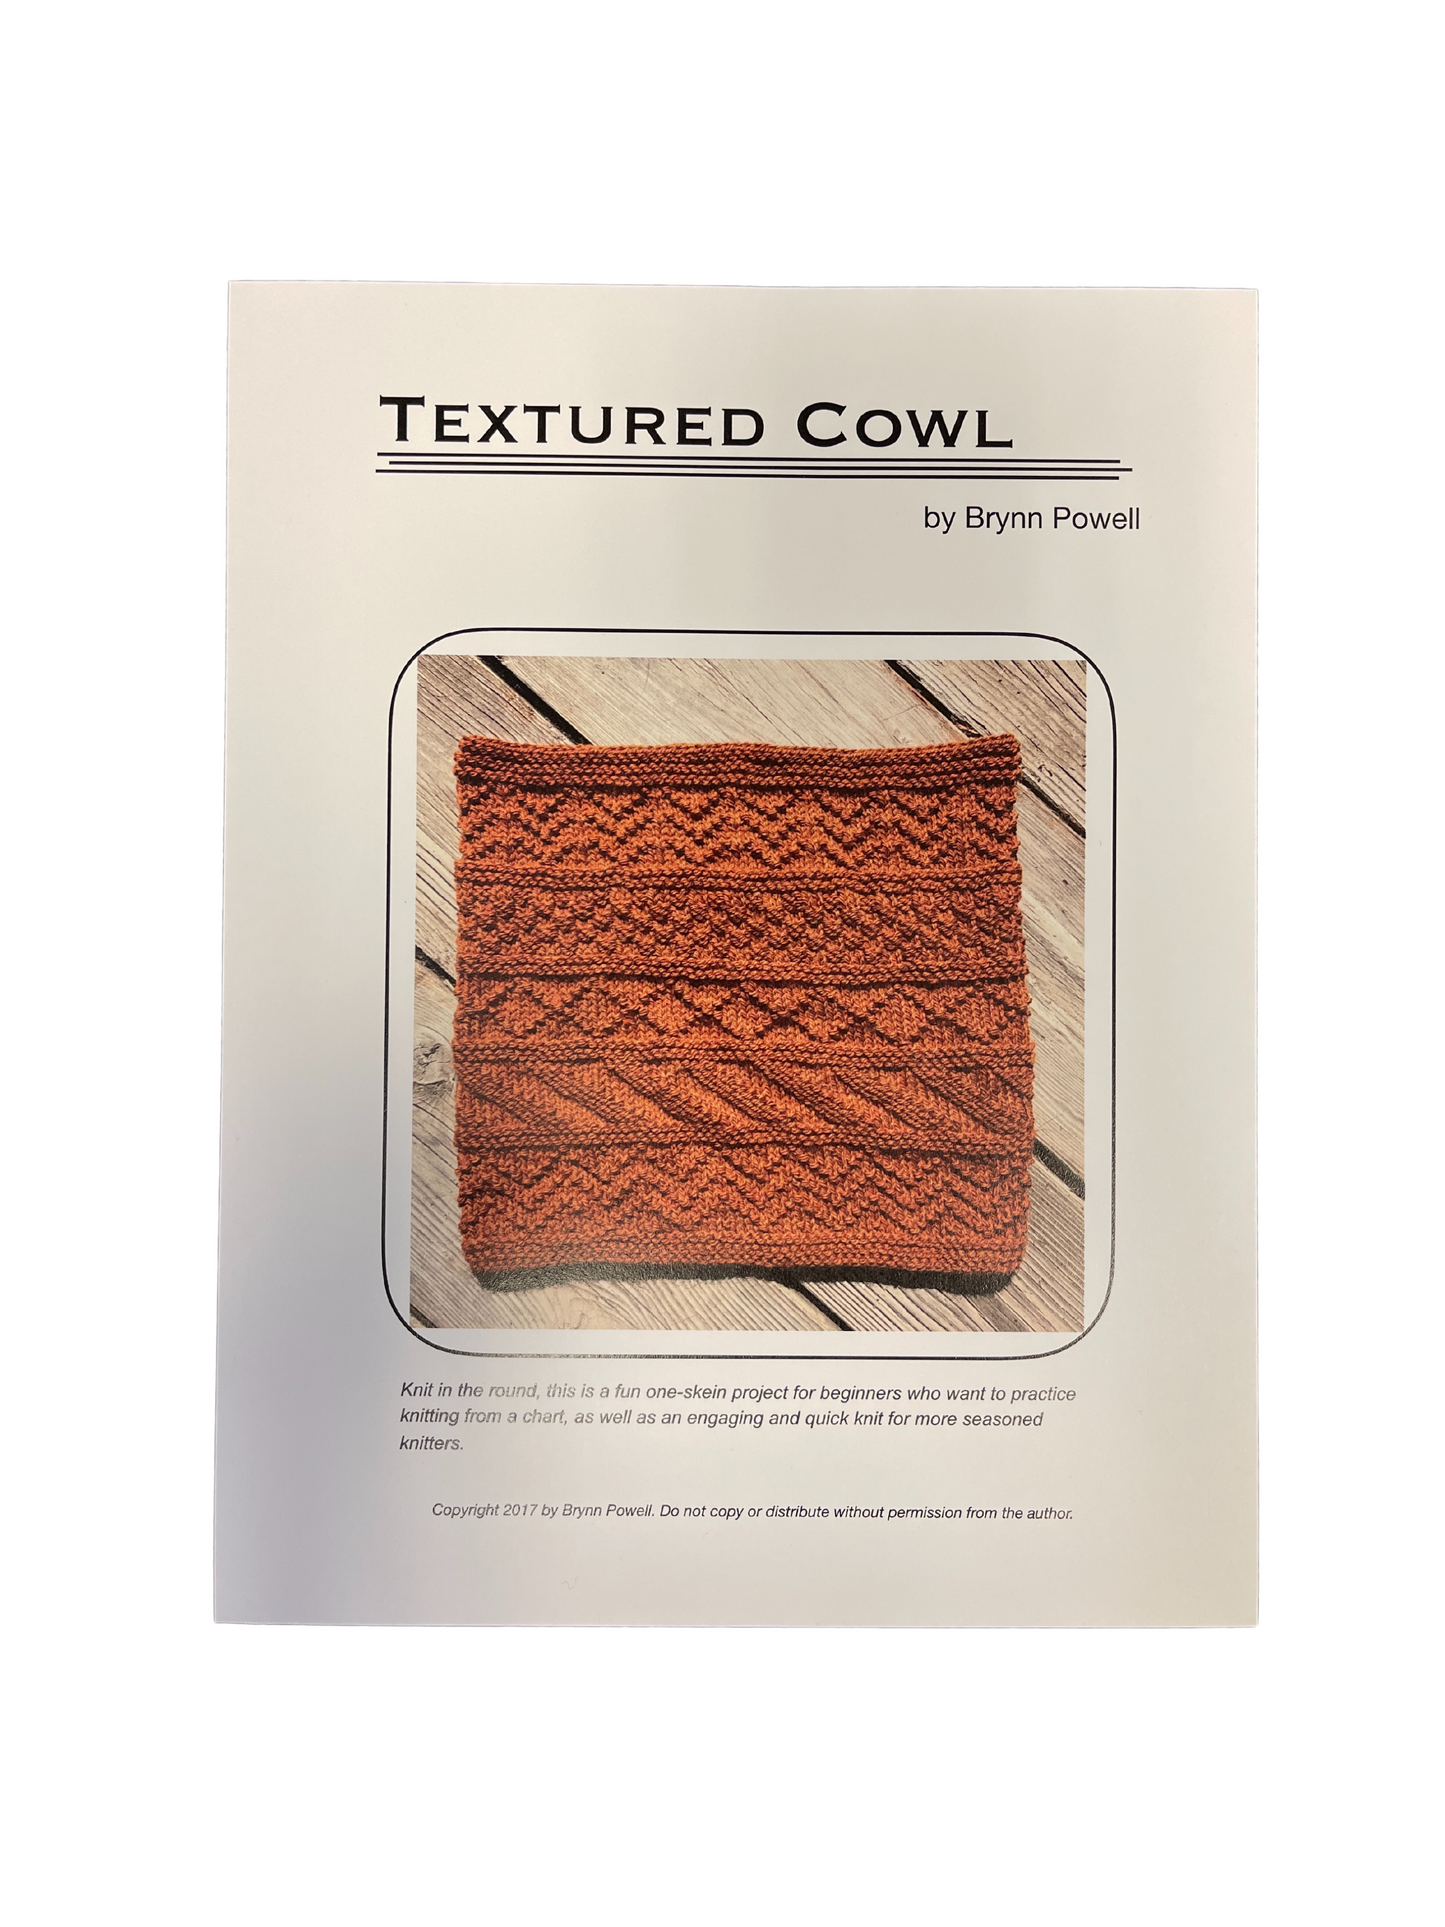 Textured Cowl by Brynn Powell